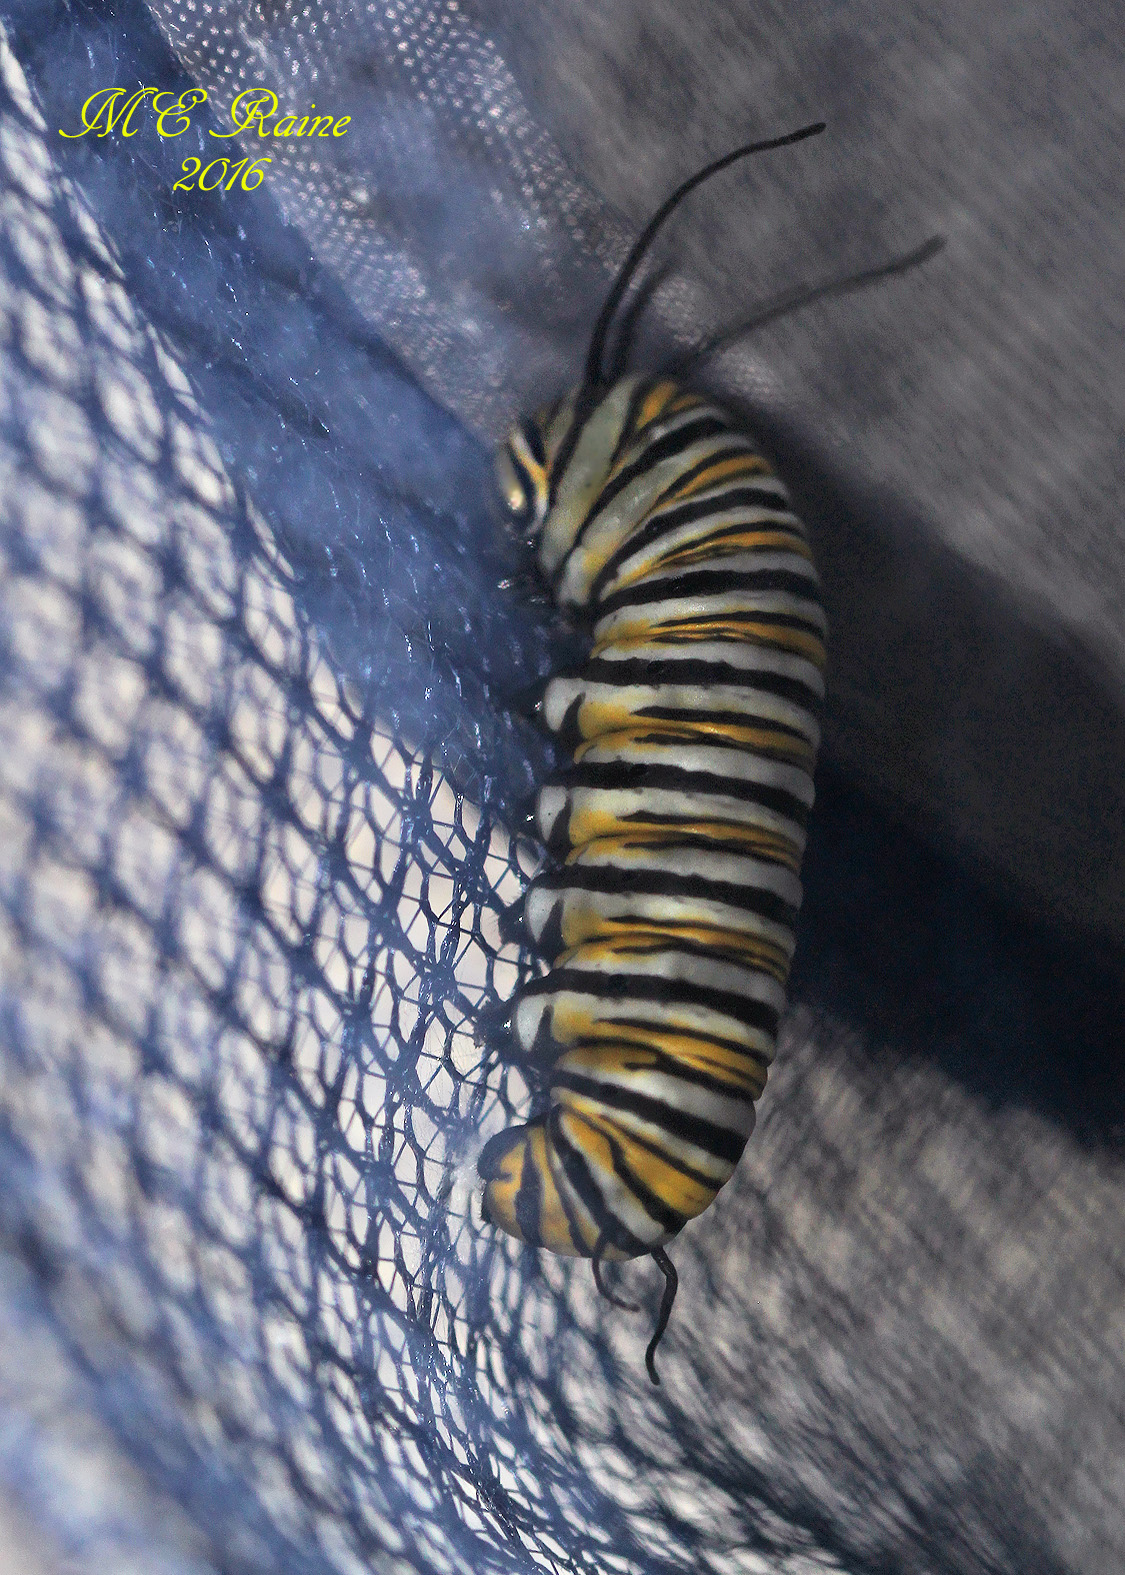 monarch-butterfly-no-1-pre-chrysalis-stage-safe-house-1-090516-7pm-ok-wm